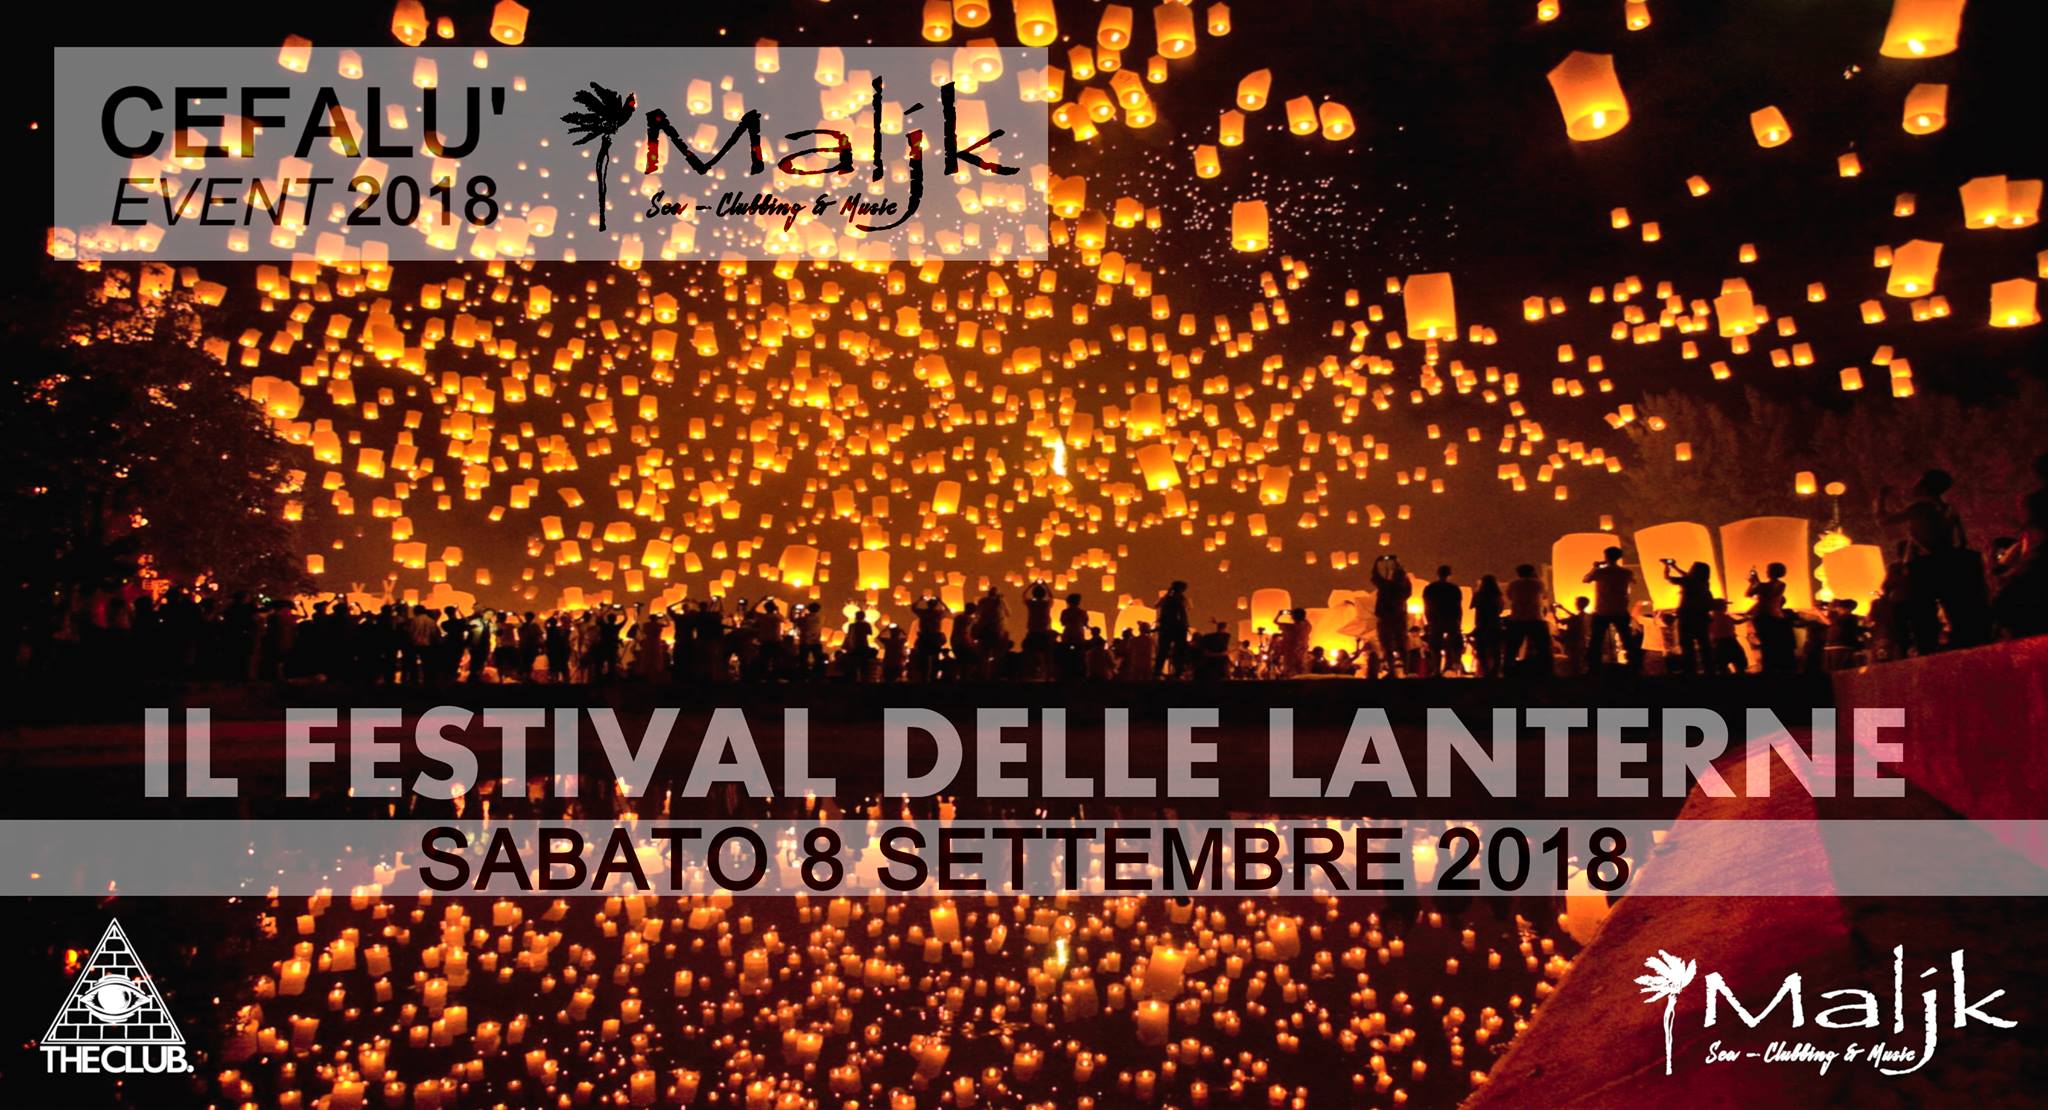 Palermo Cefalù Festival delle Lanterne